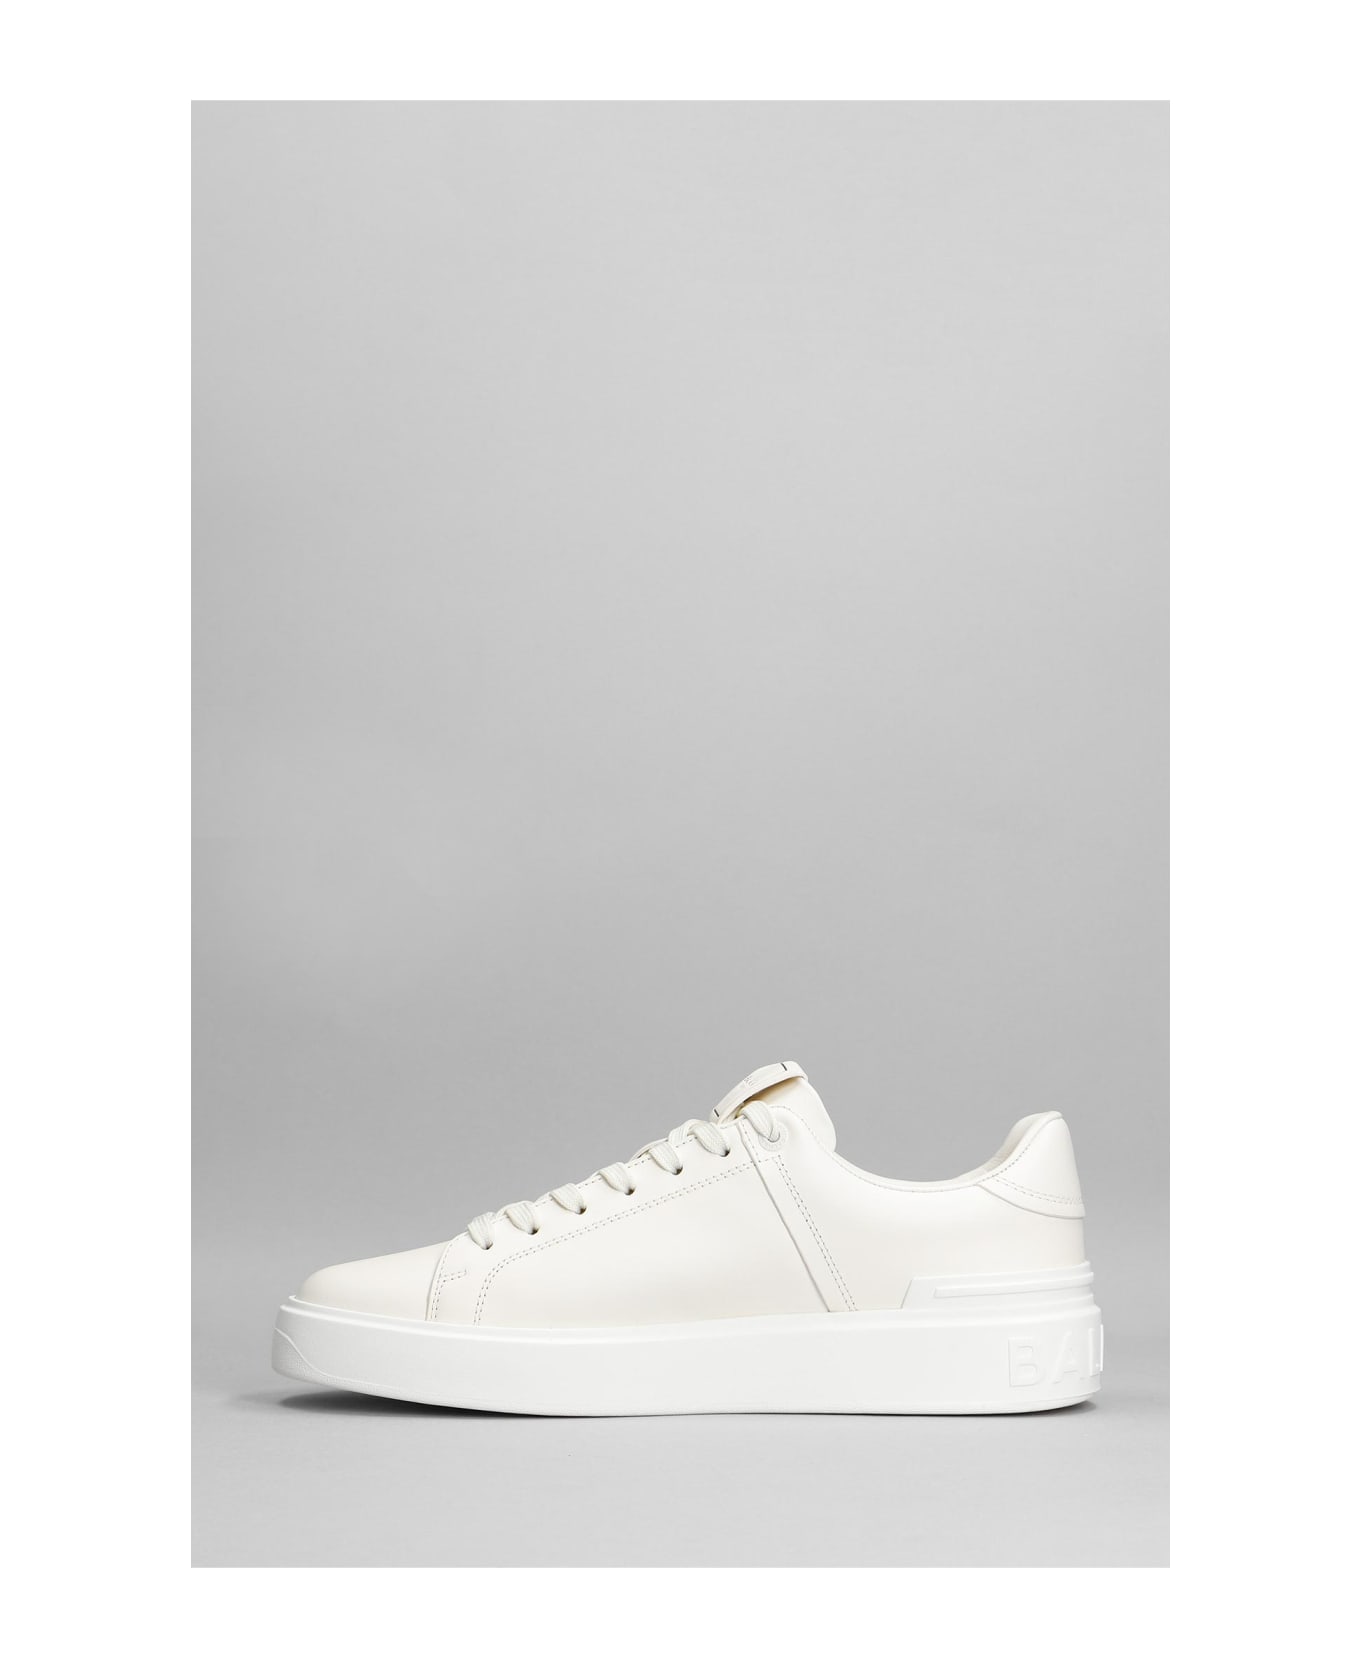 Balmain B Court Sneakers In White Leather - white